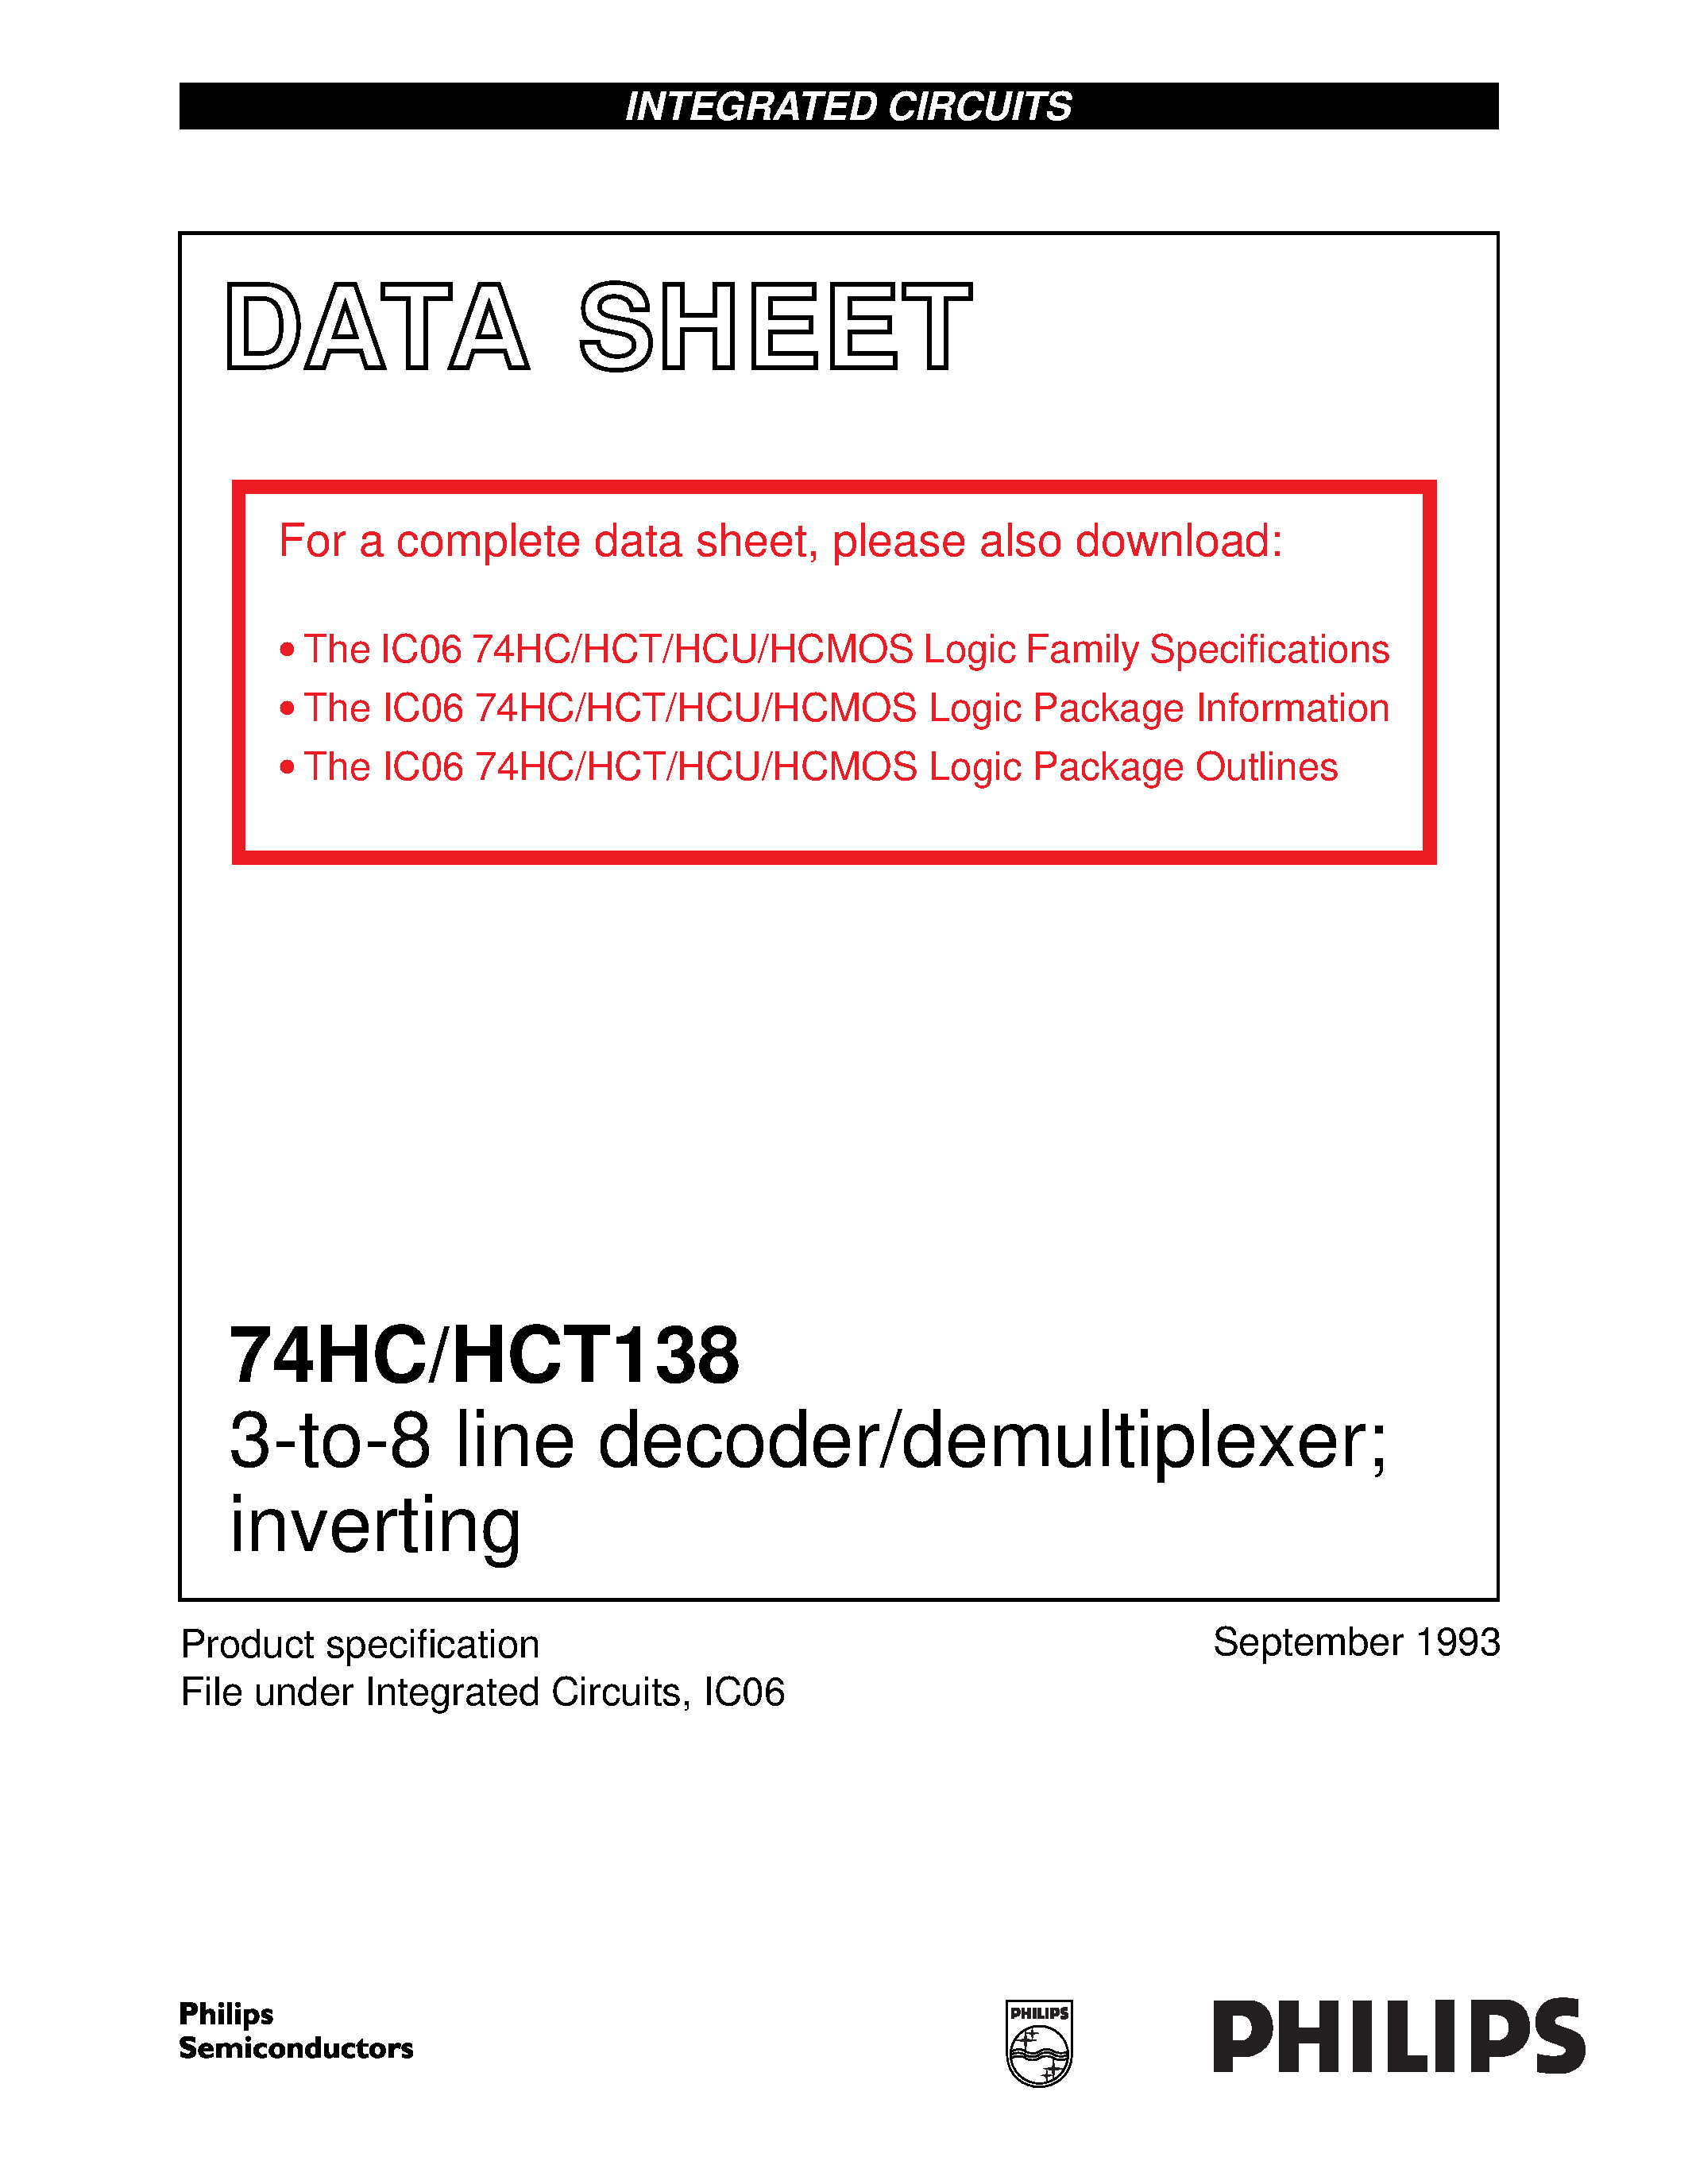 Даташит 74HCT138 - 3-to-8 line decoder/demultiplexer inverting страница 1